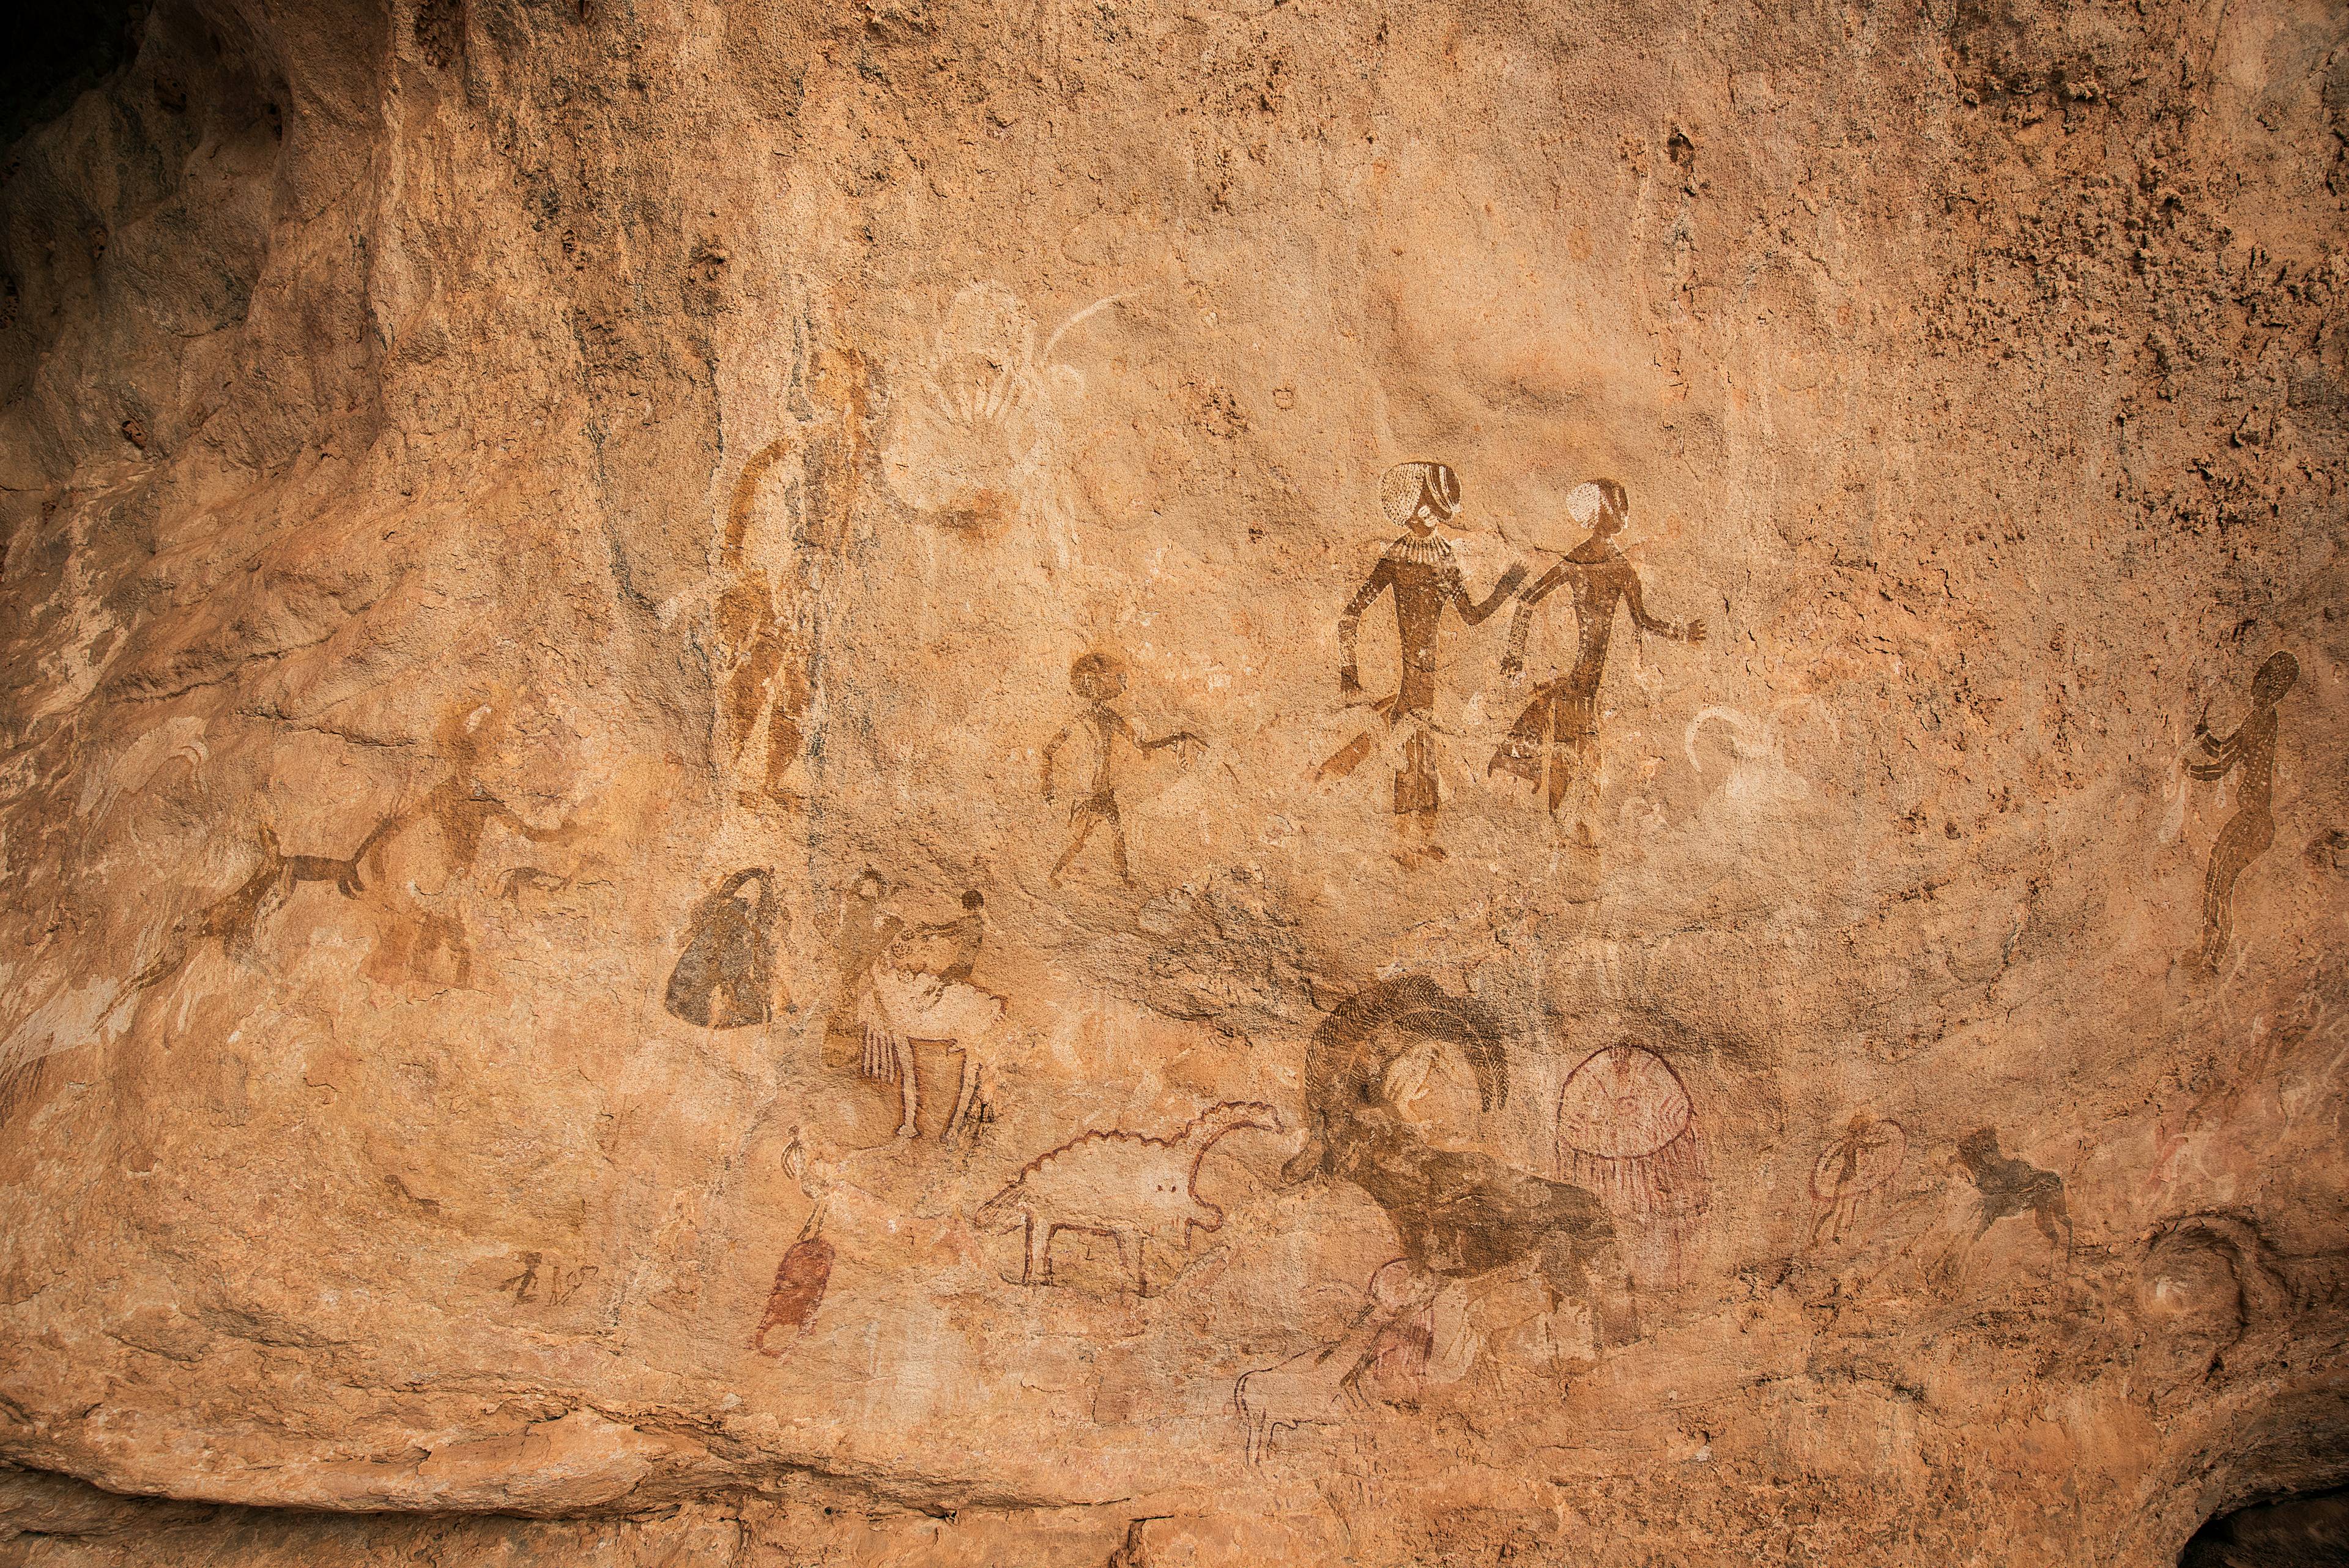 dipinti rupestri in algeria